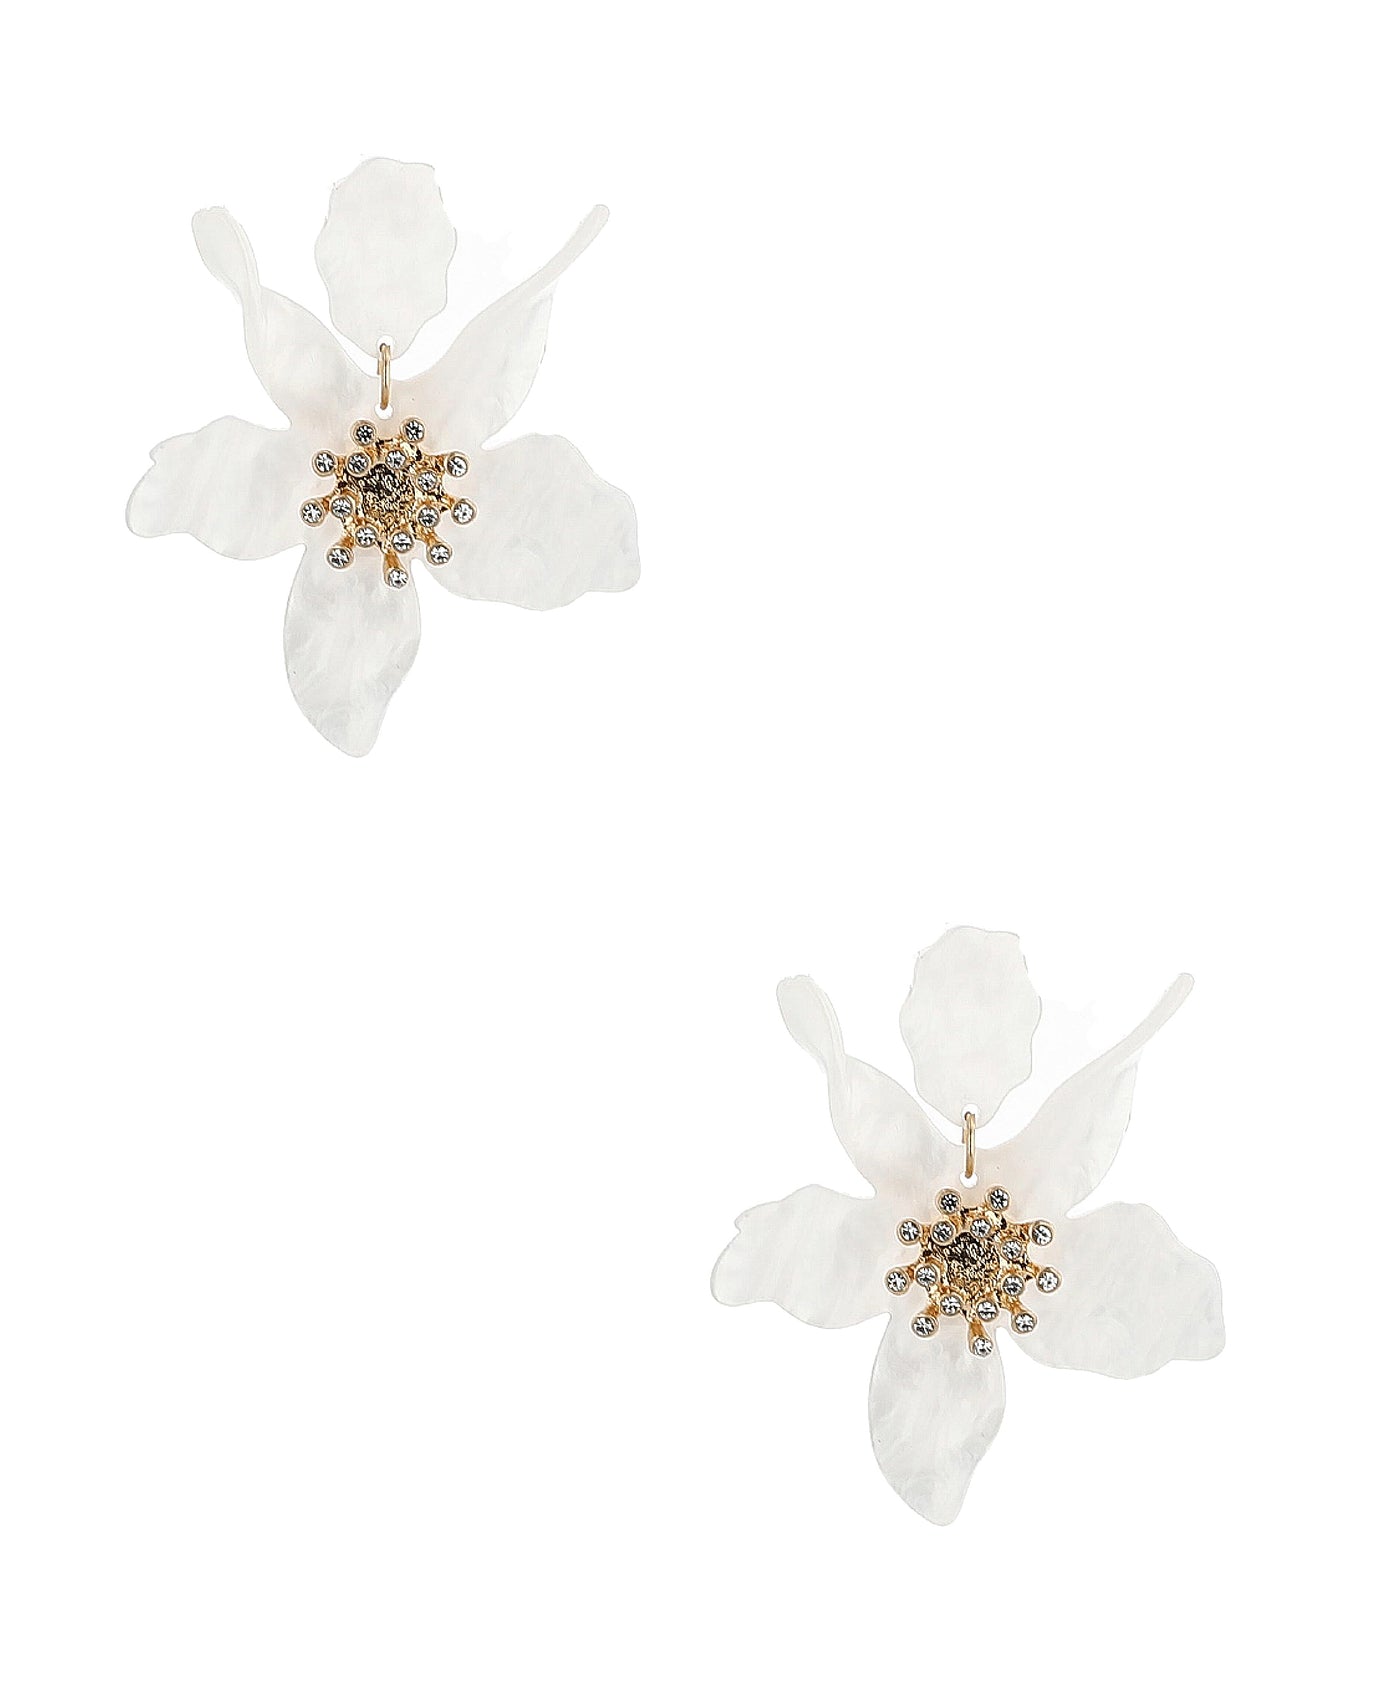 Resin Flower Earrings w/ Crystals view 1